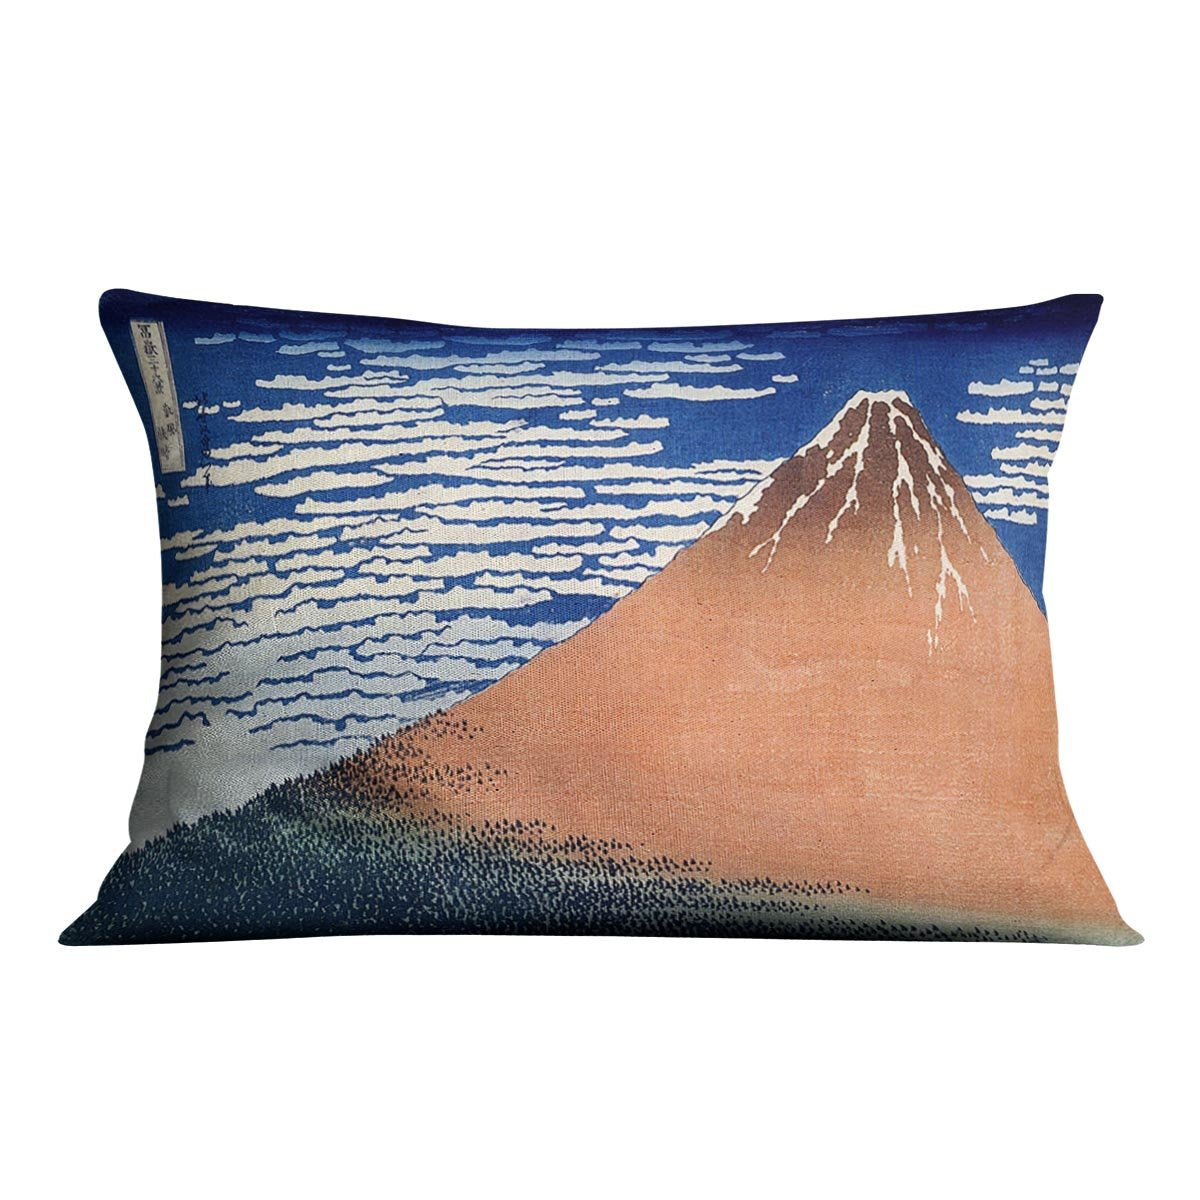 Mount Fuji by Hokusai Throw Pillow